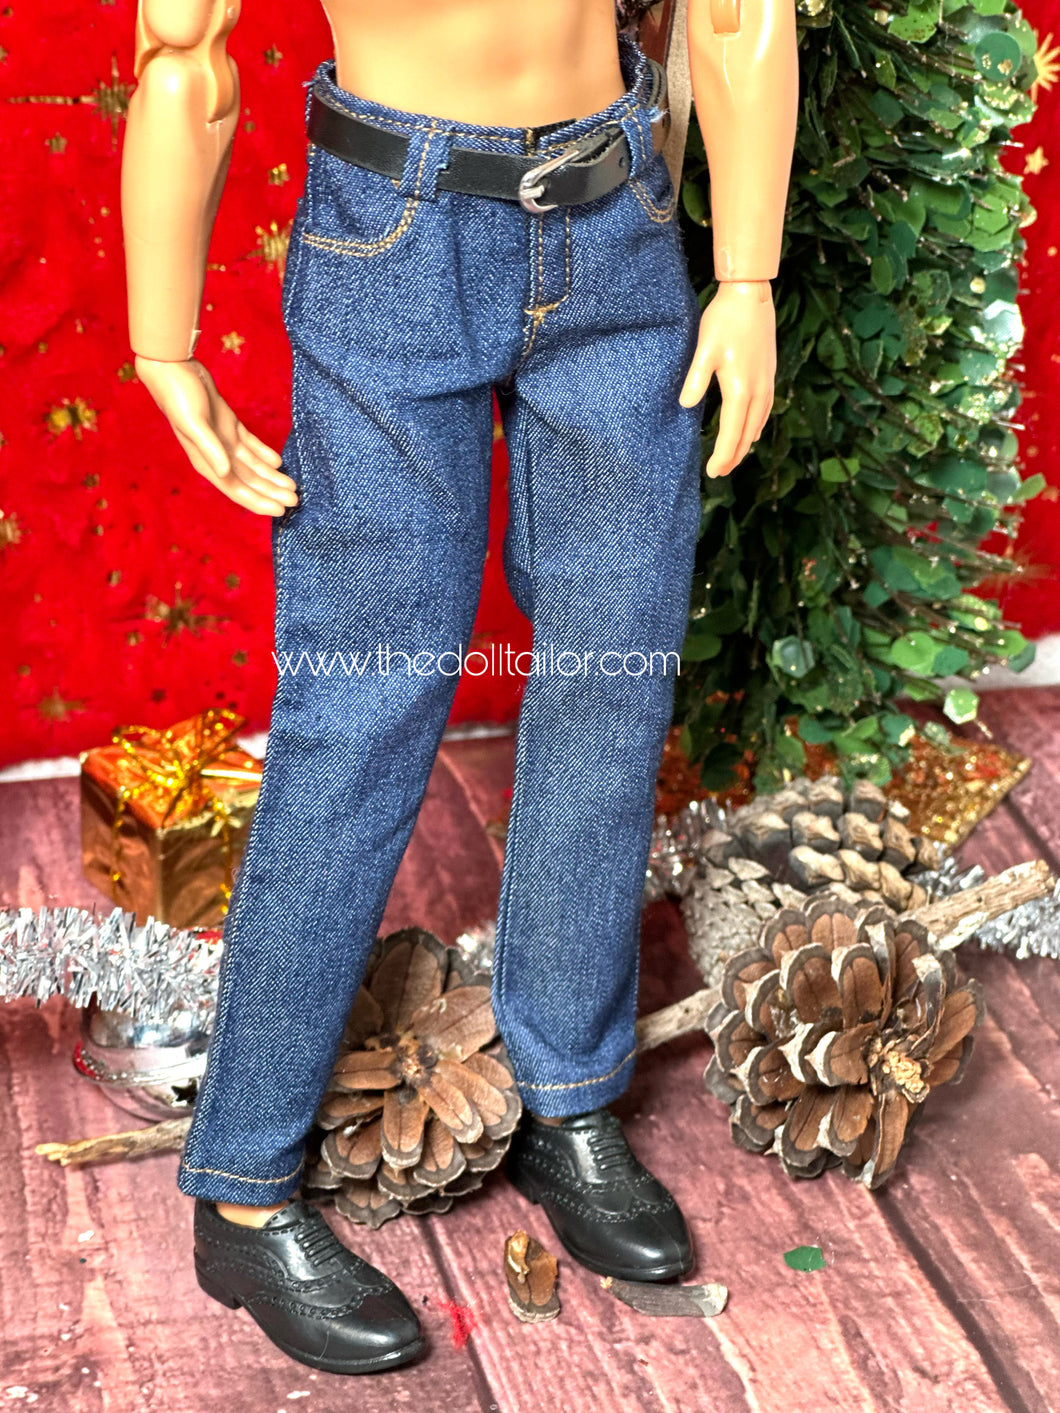 Ken doll jeans realistic jeans for Ken dolls 1/6 scale jeans for dolls